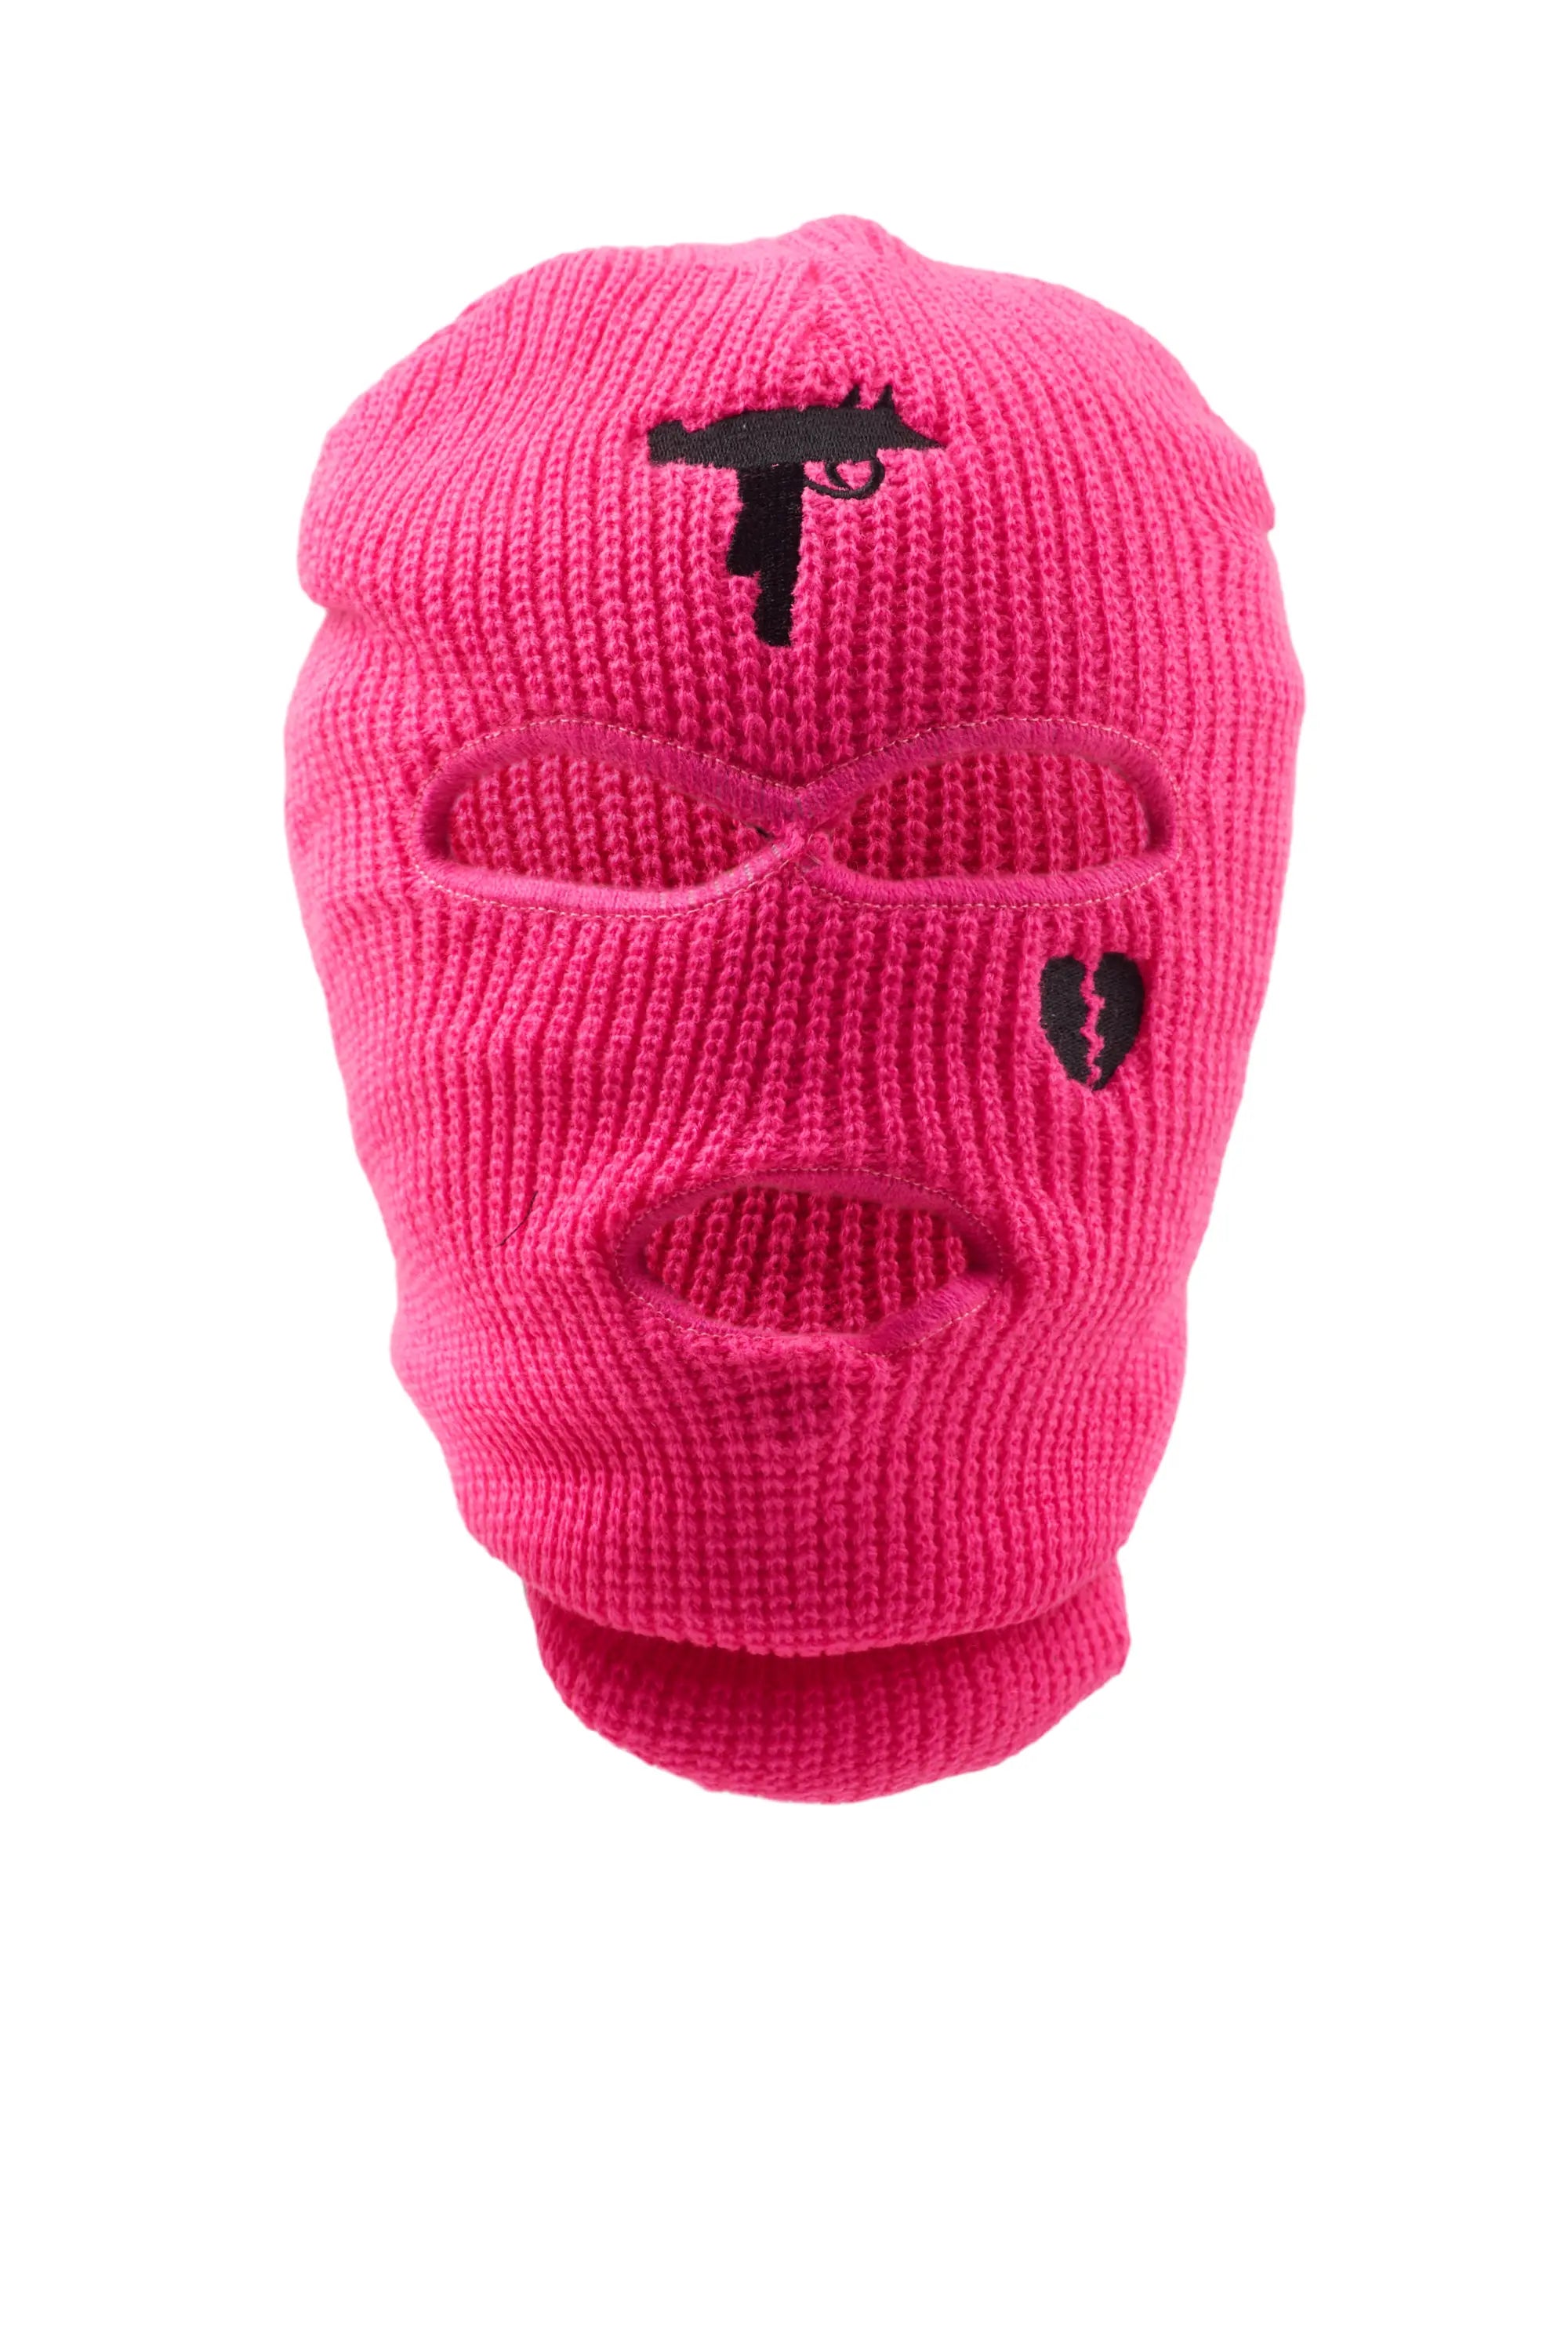 Micah Pink Embroidery Ski Mask